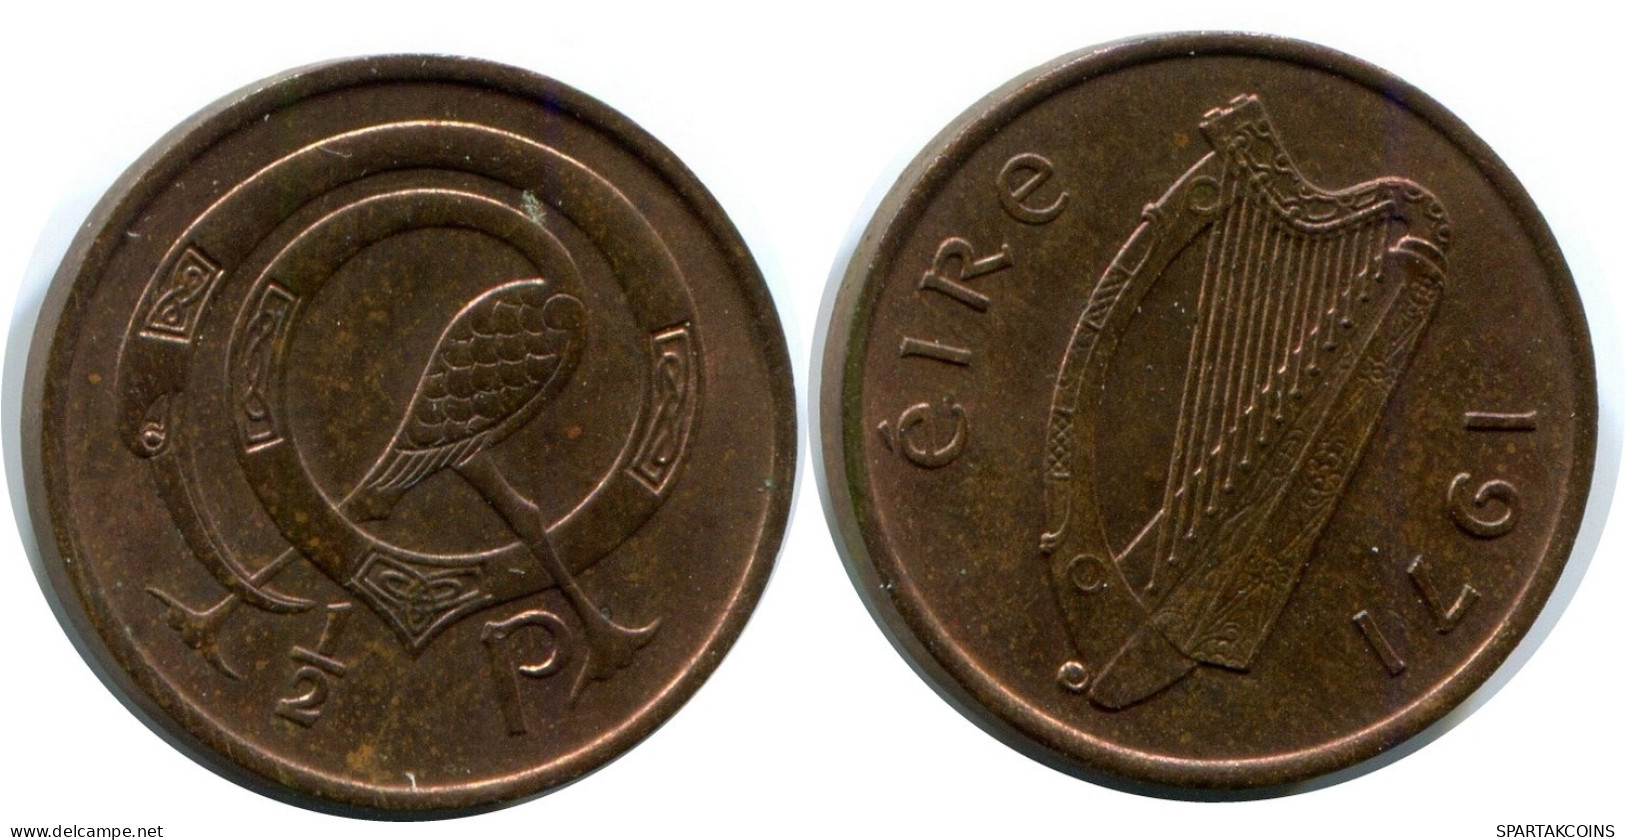 1/2 PENNY 1971 IRELAND Coin #AX112.U.A - Ireland